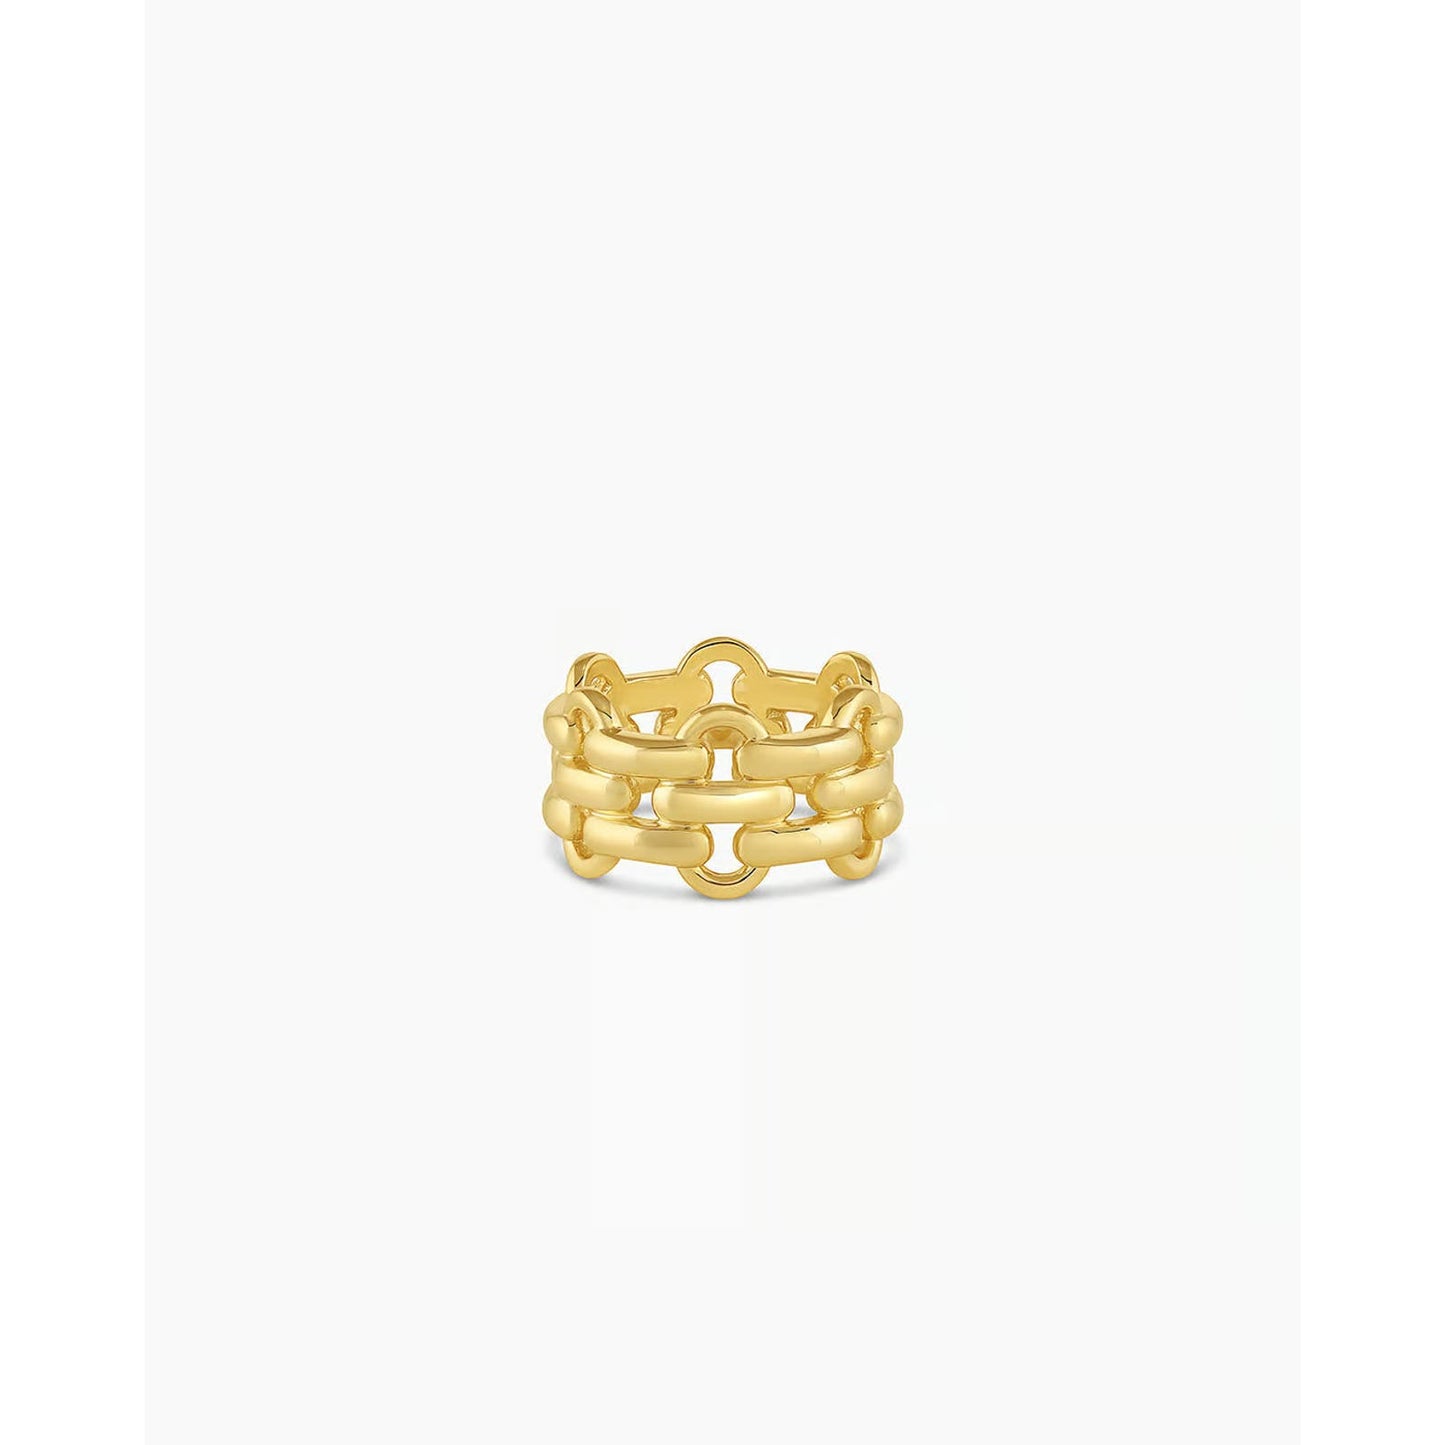 Gorjana Brooklyn Statement Ring 18k Gold Plated Chain Link Design Size 7